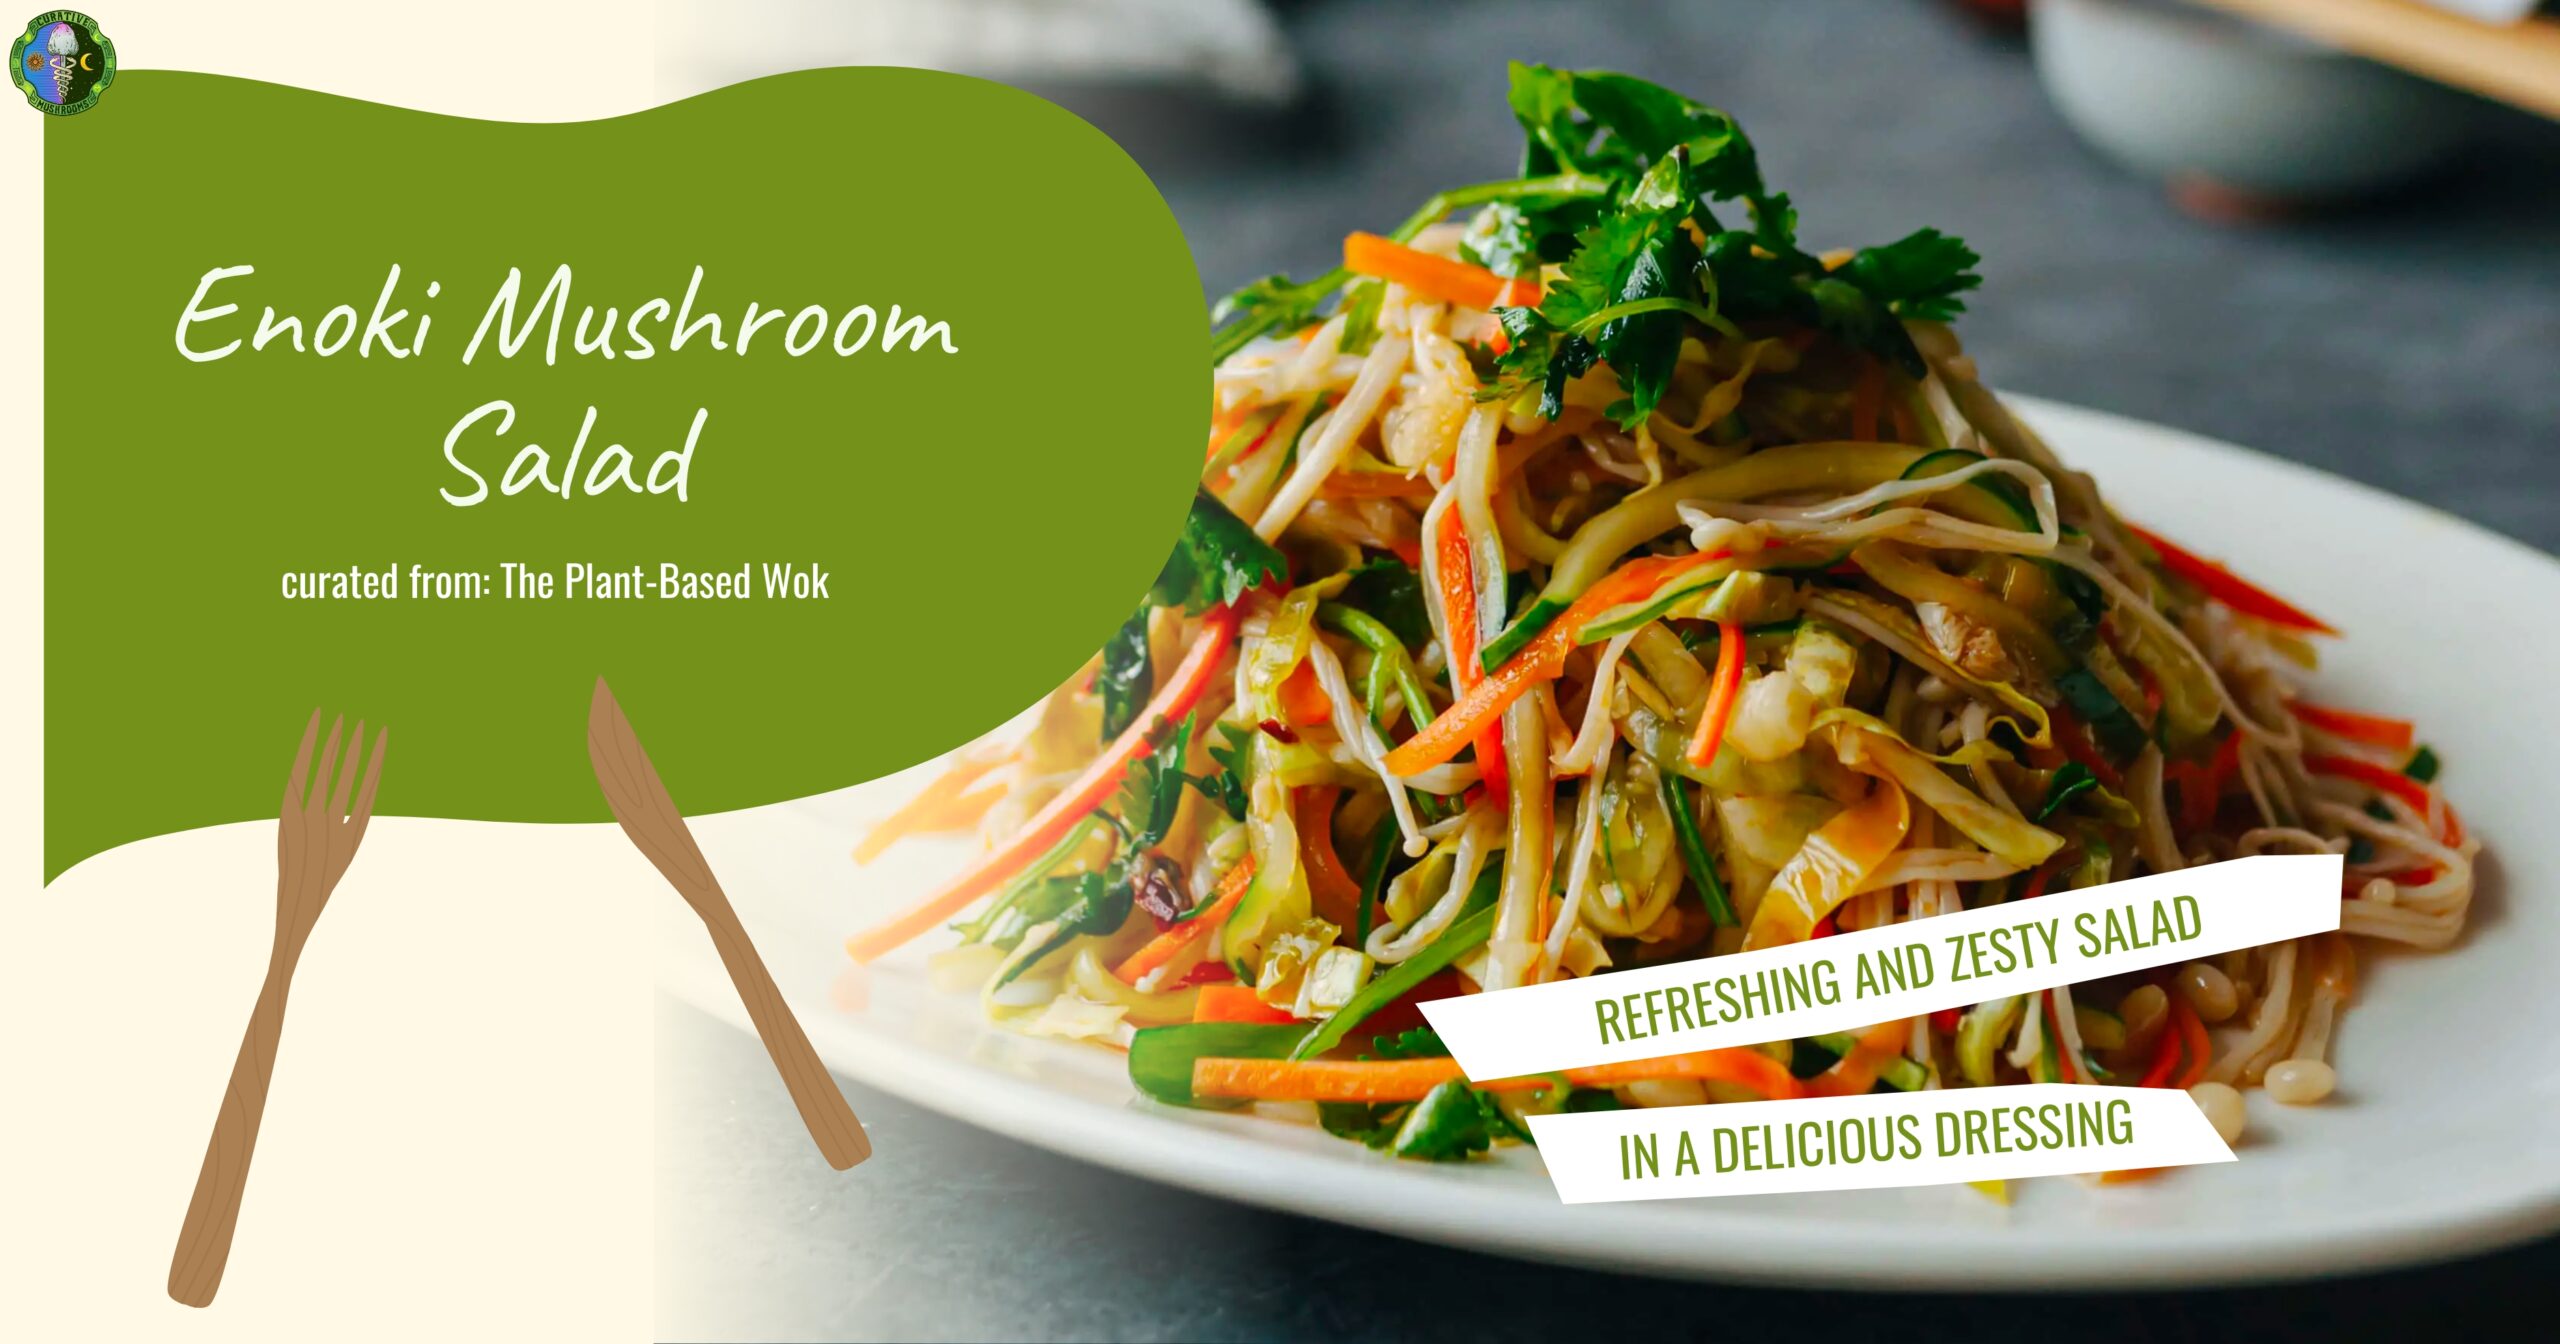 Enoki Mushroom Salad Recipe - Easy Delicious Recipe - inspired by The Plant-Based Wok